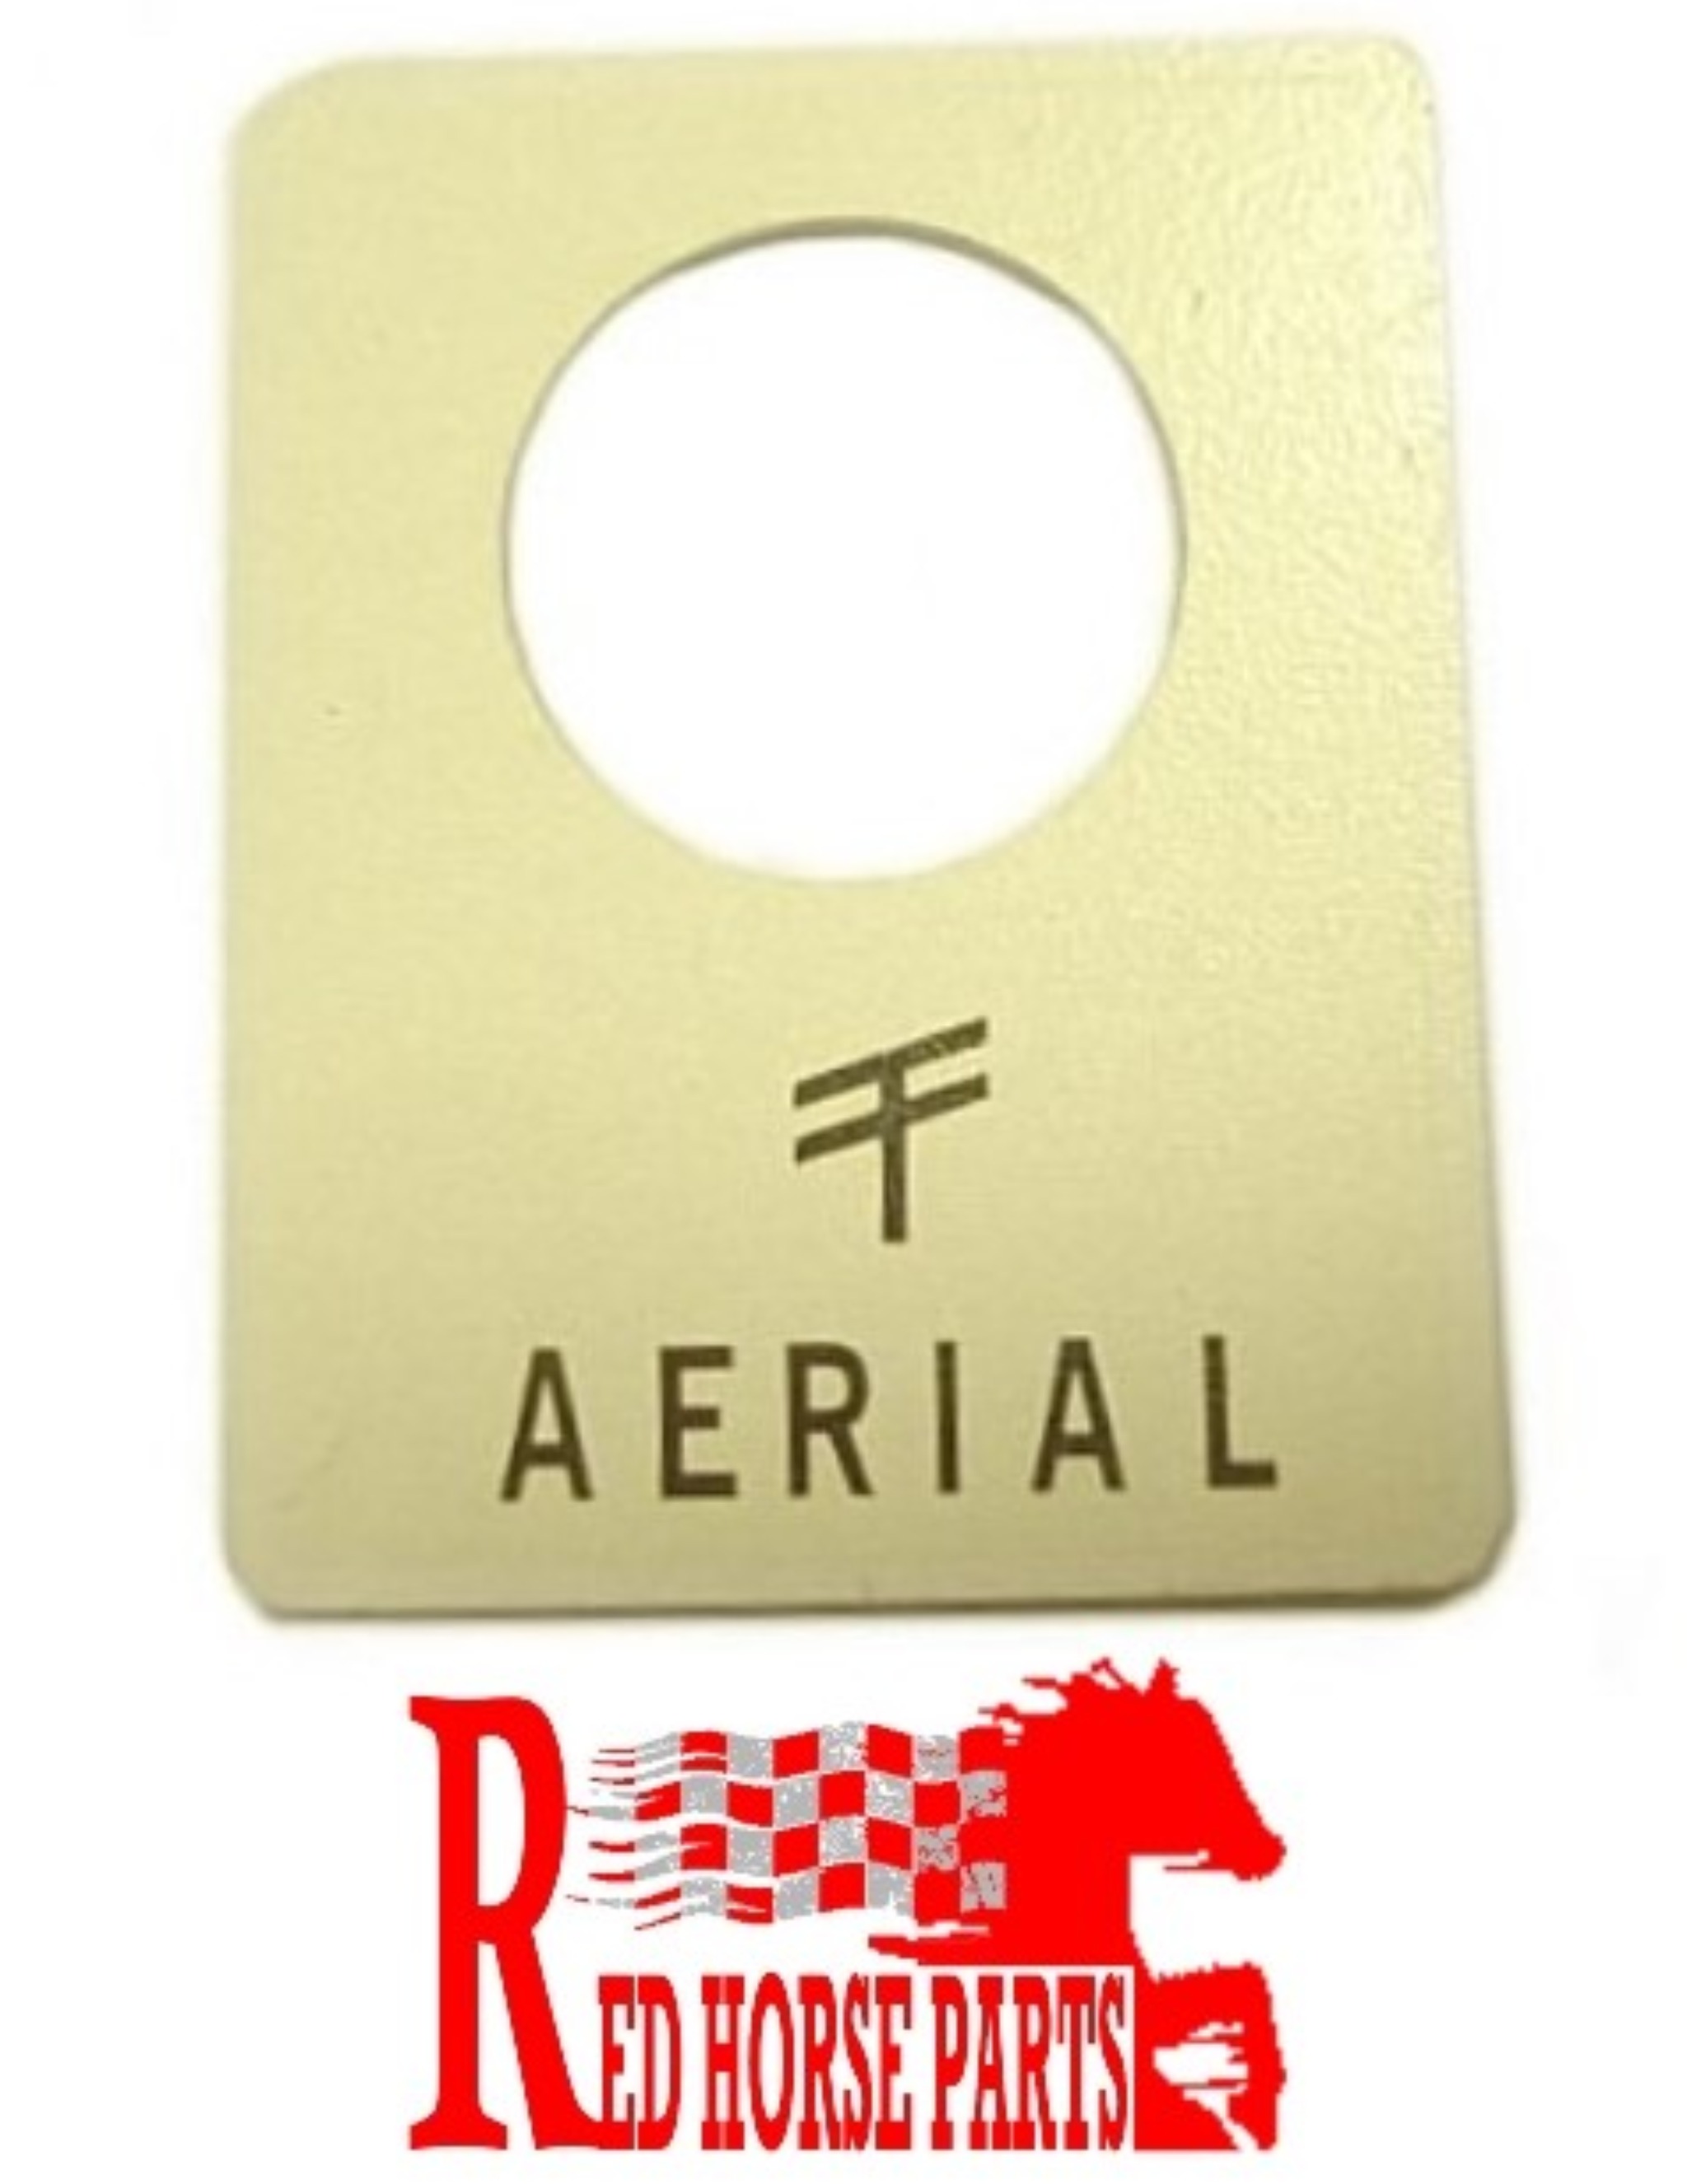 Ferrari 308 Aerial Plate